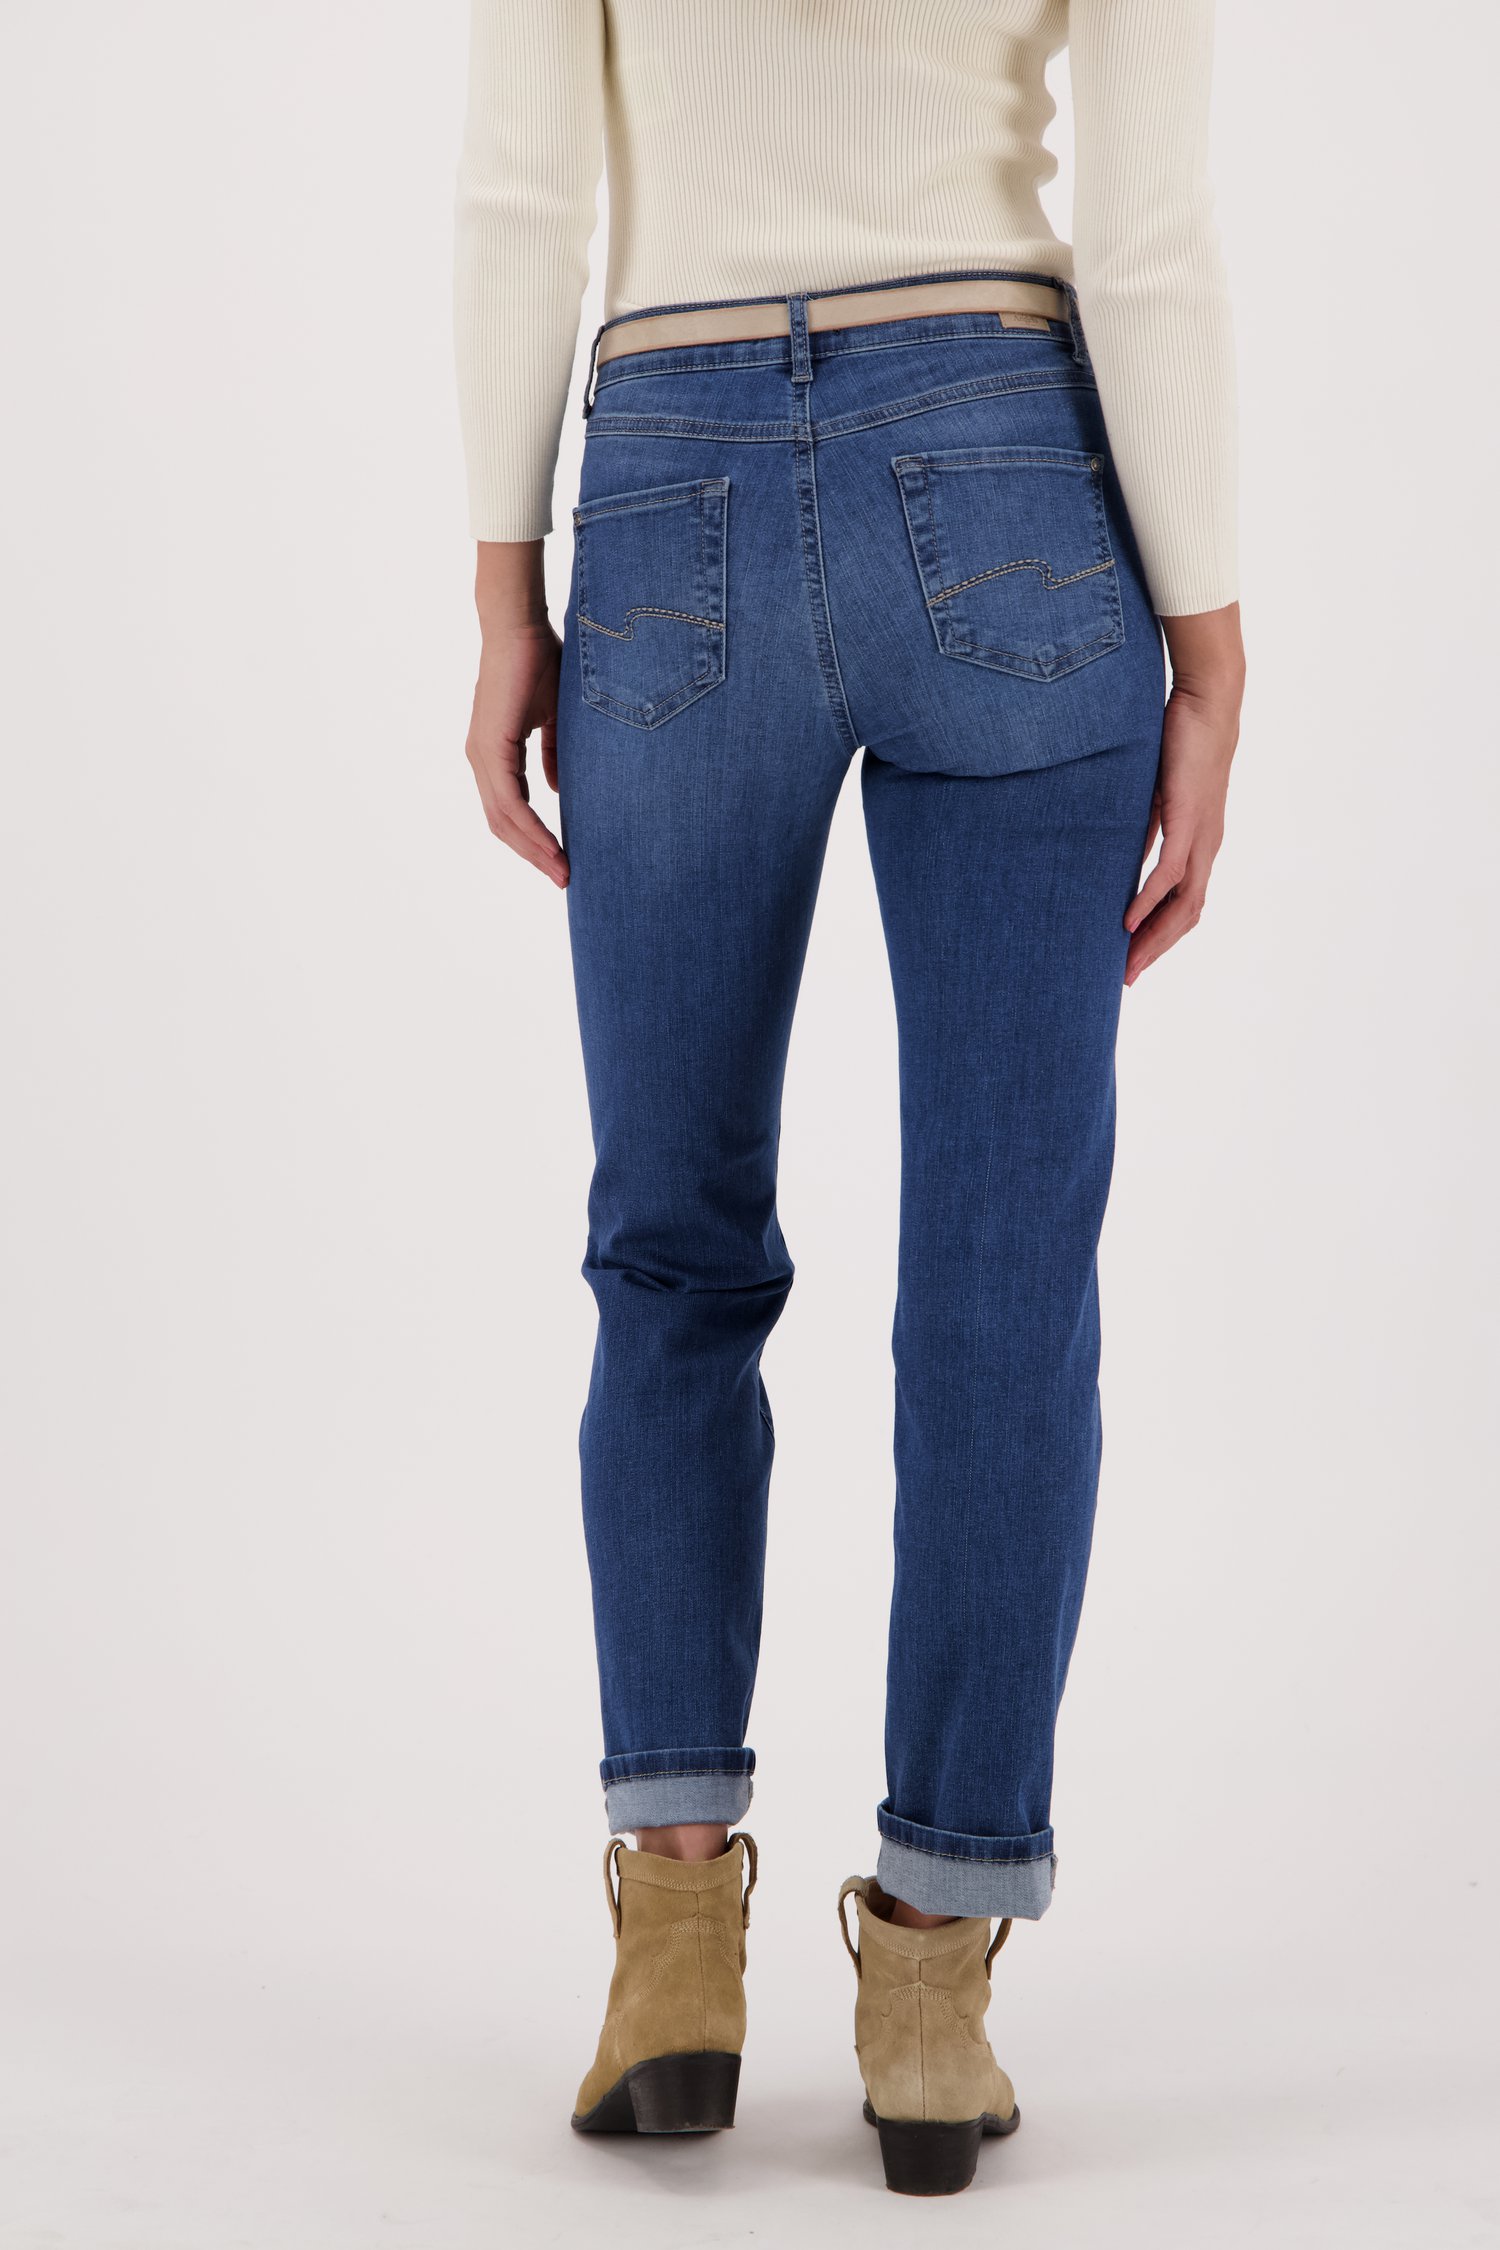 Blauwe jeans - straight fit van Angels voor Dames